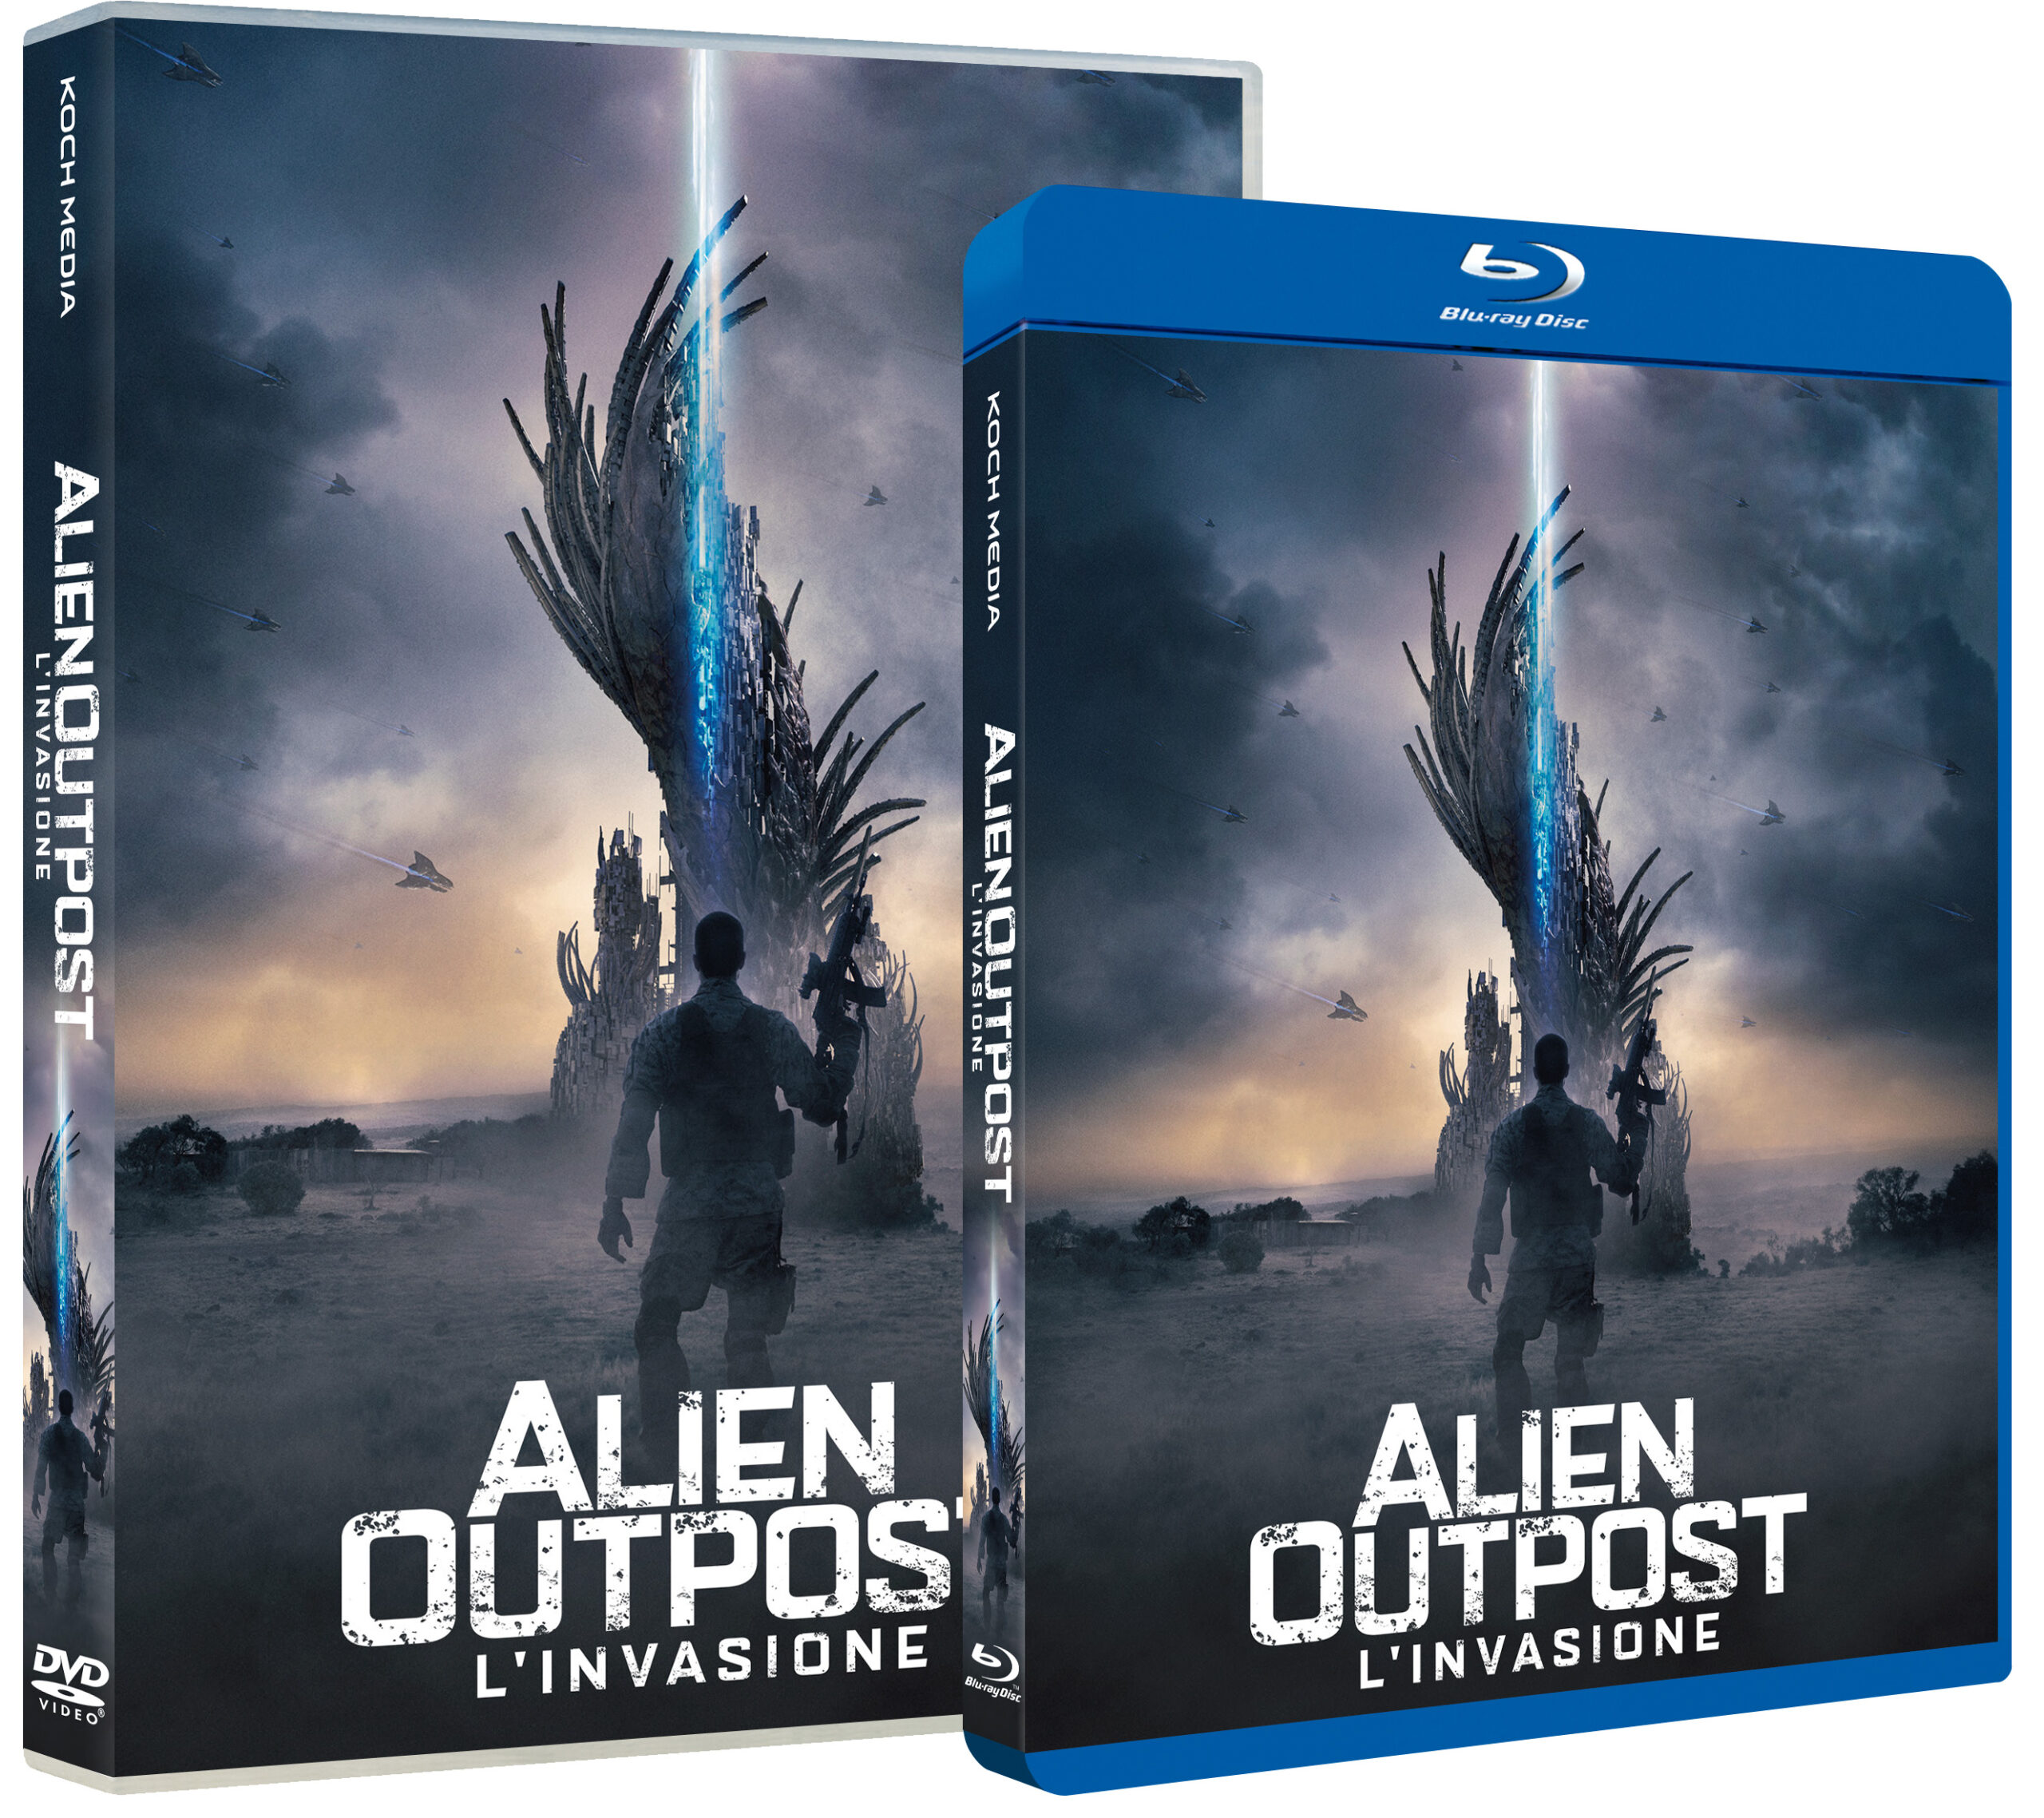 Pack Alien Outpost - L'invasione in DVD e Blu-ray